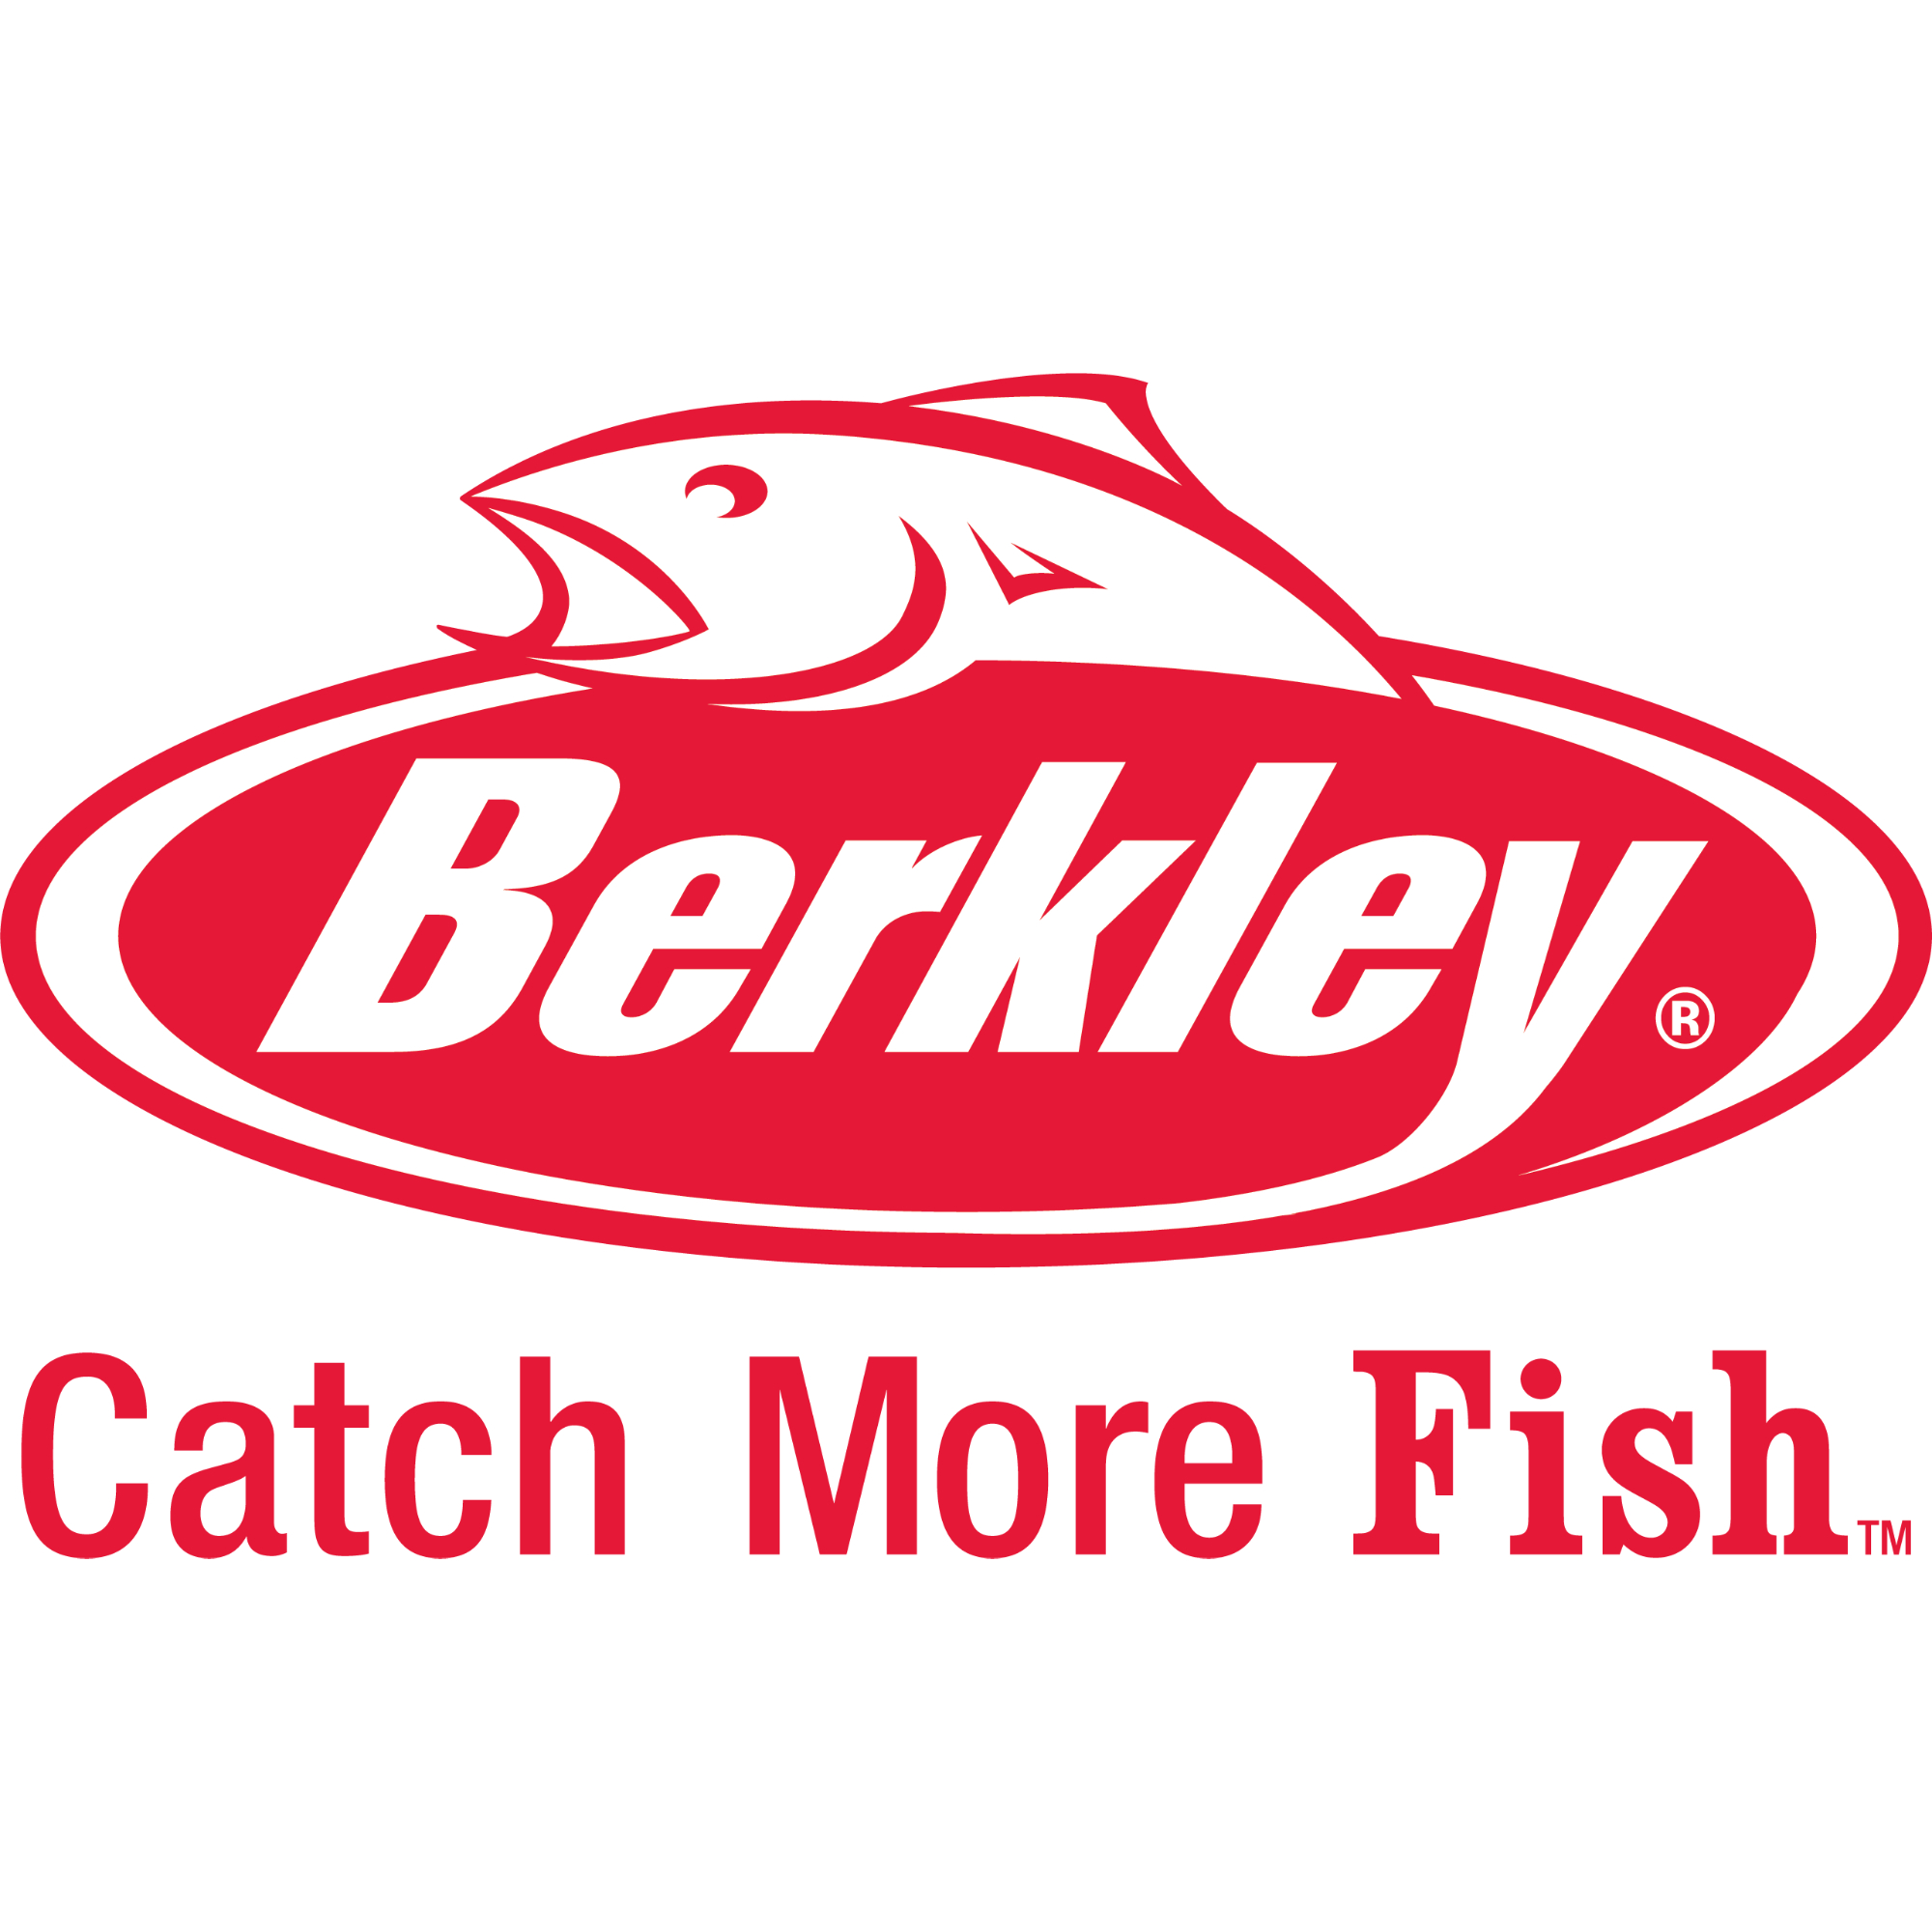 Berkley Trilene Big Game, Steel Blue, 12lb 5.4kg Fishing Line - image 3 of 5